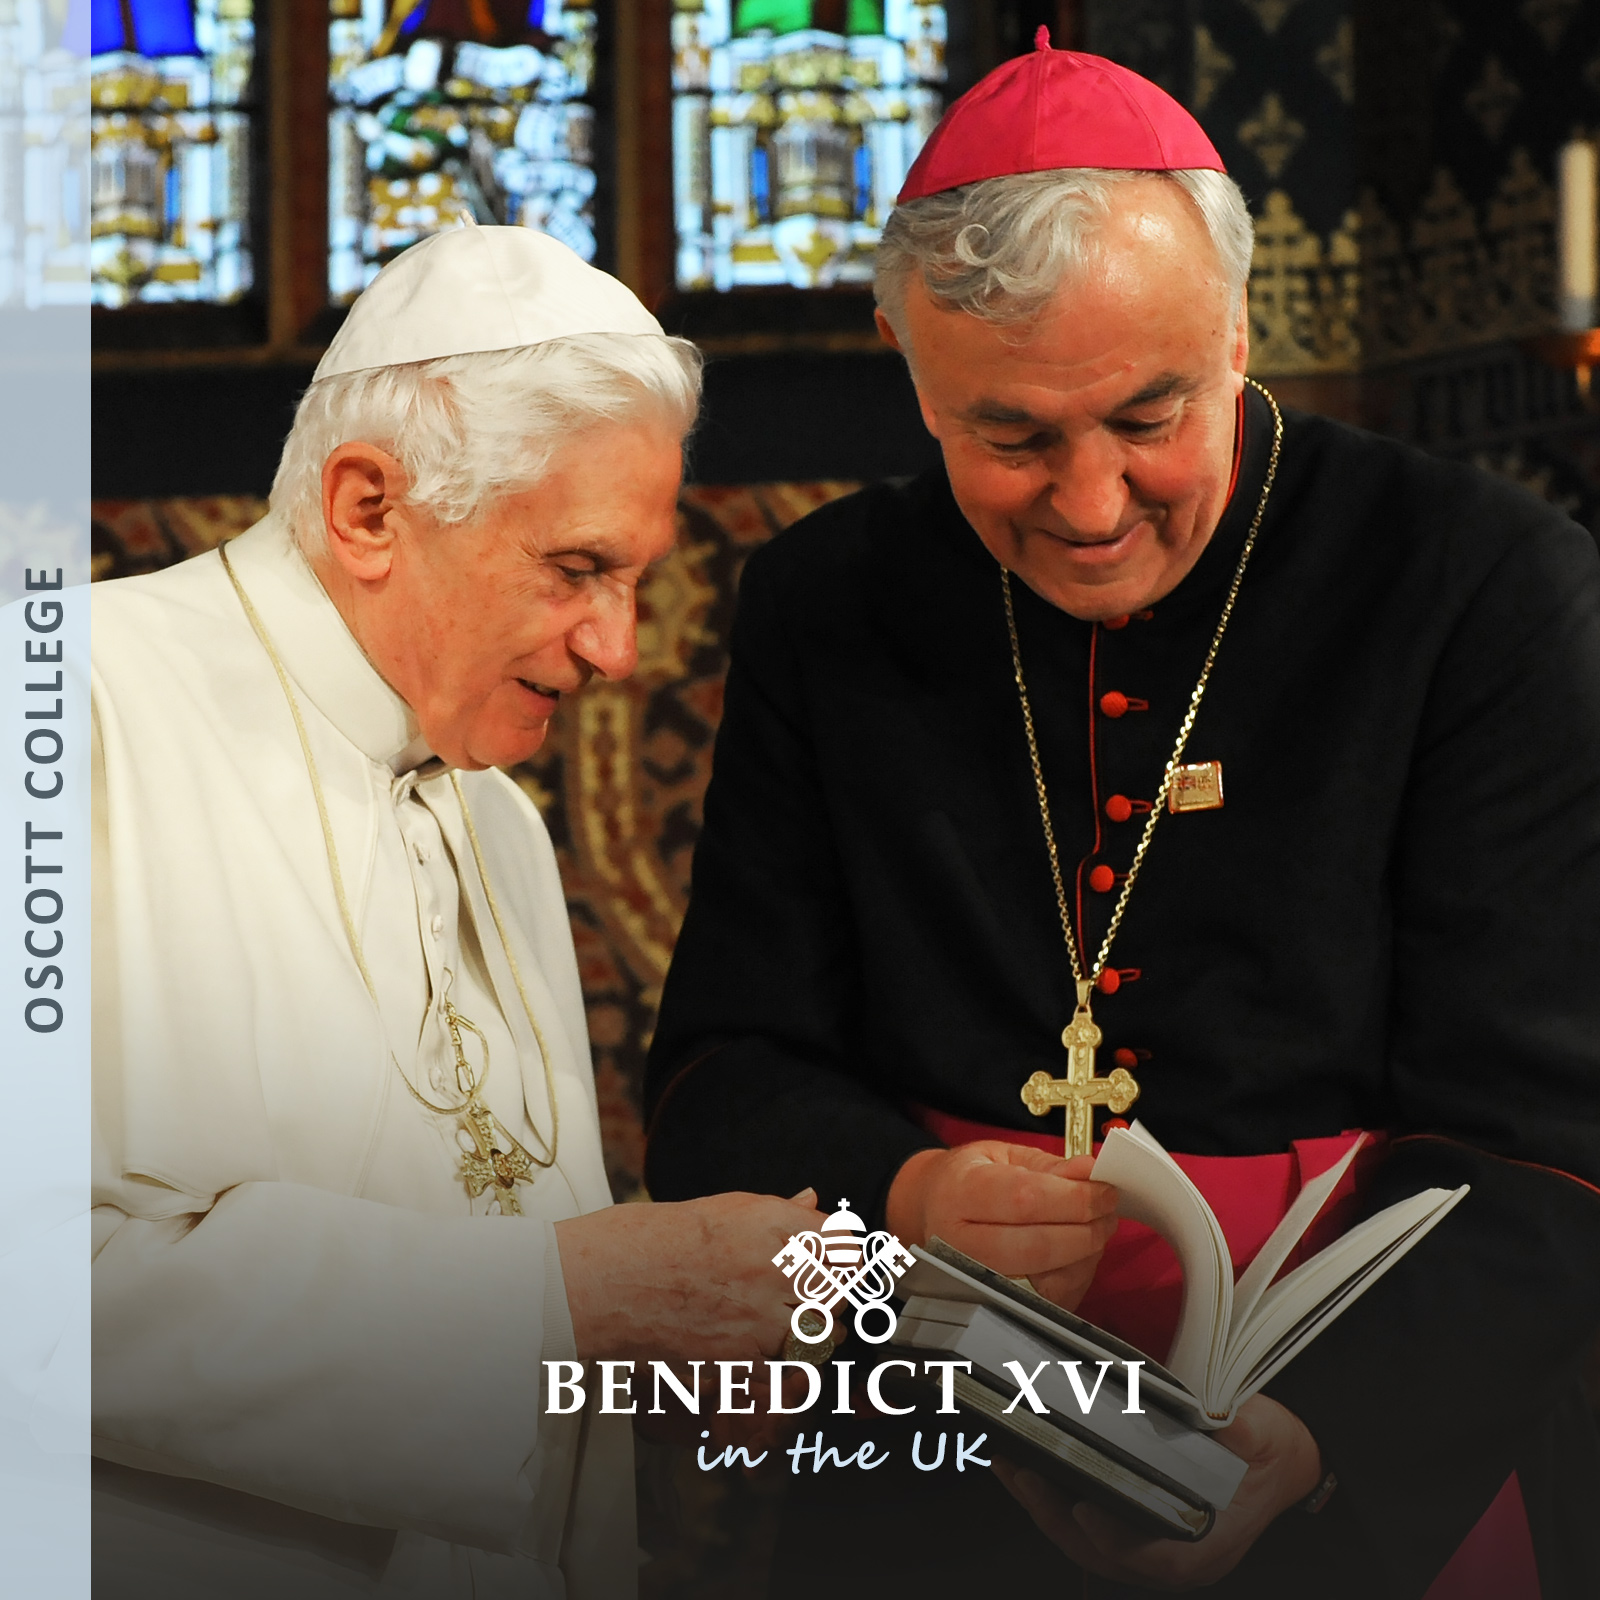 Archbishop Nichols addresses Pope Benedict XVI at Oscott College